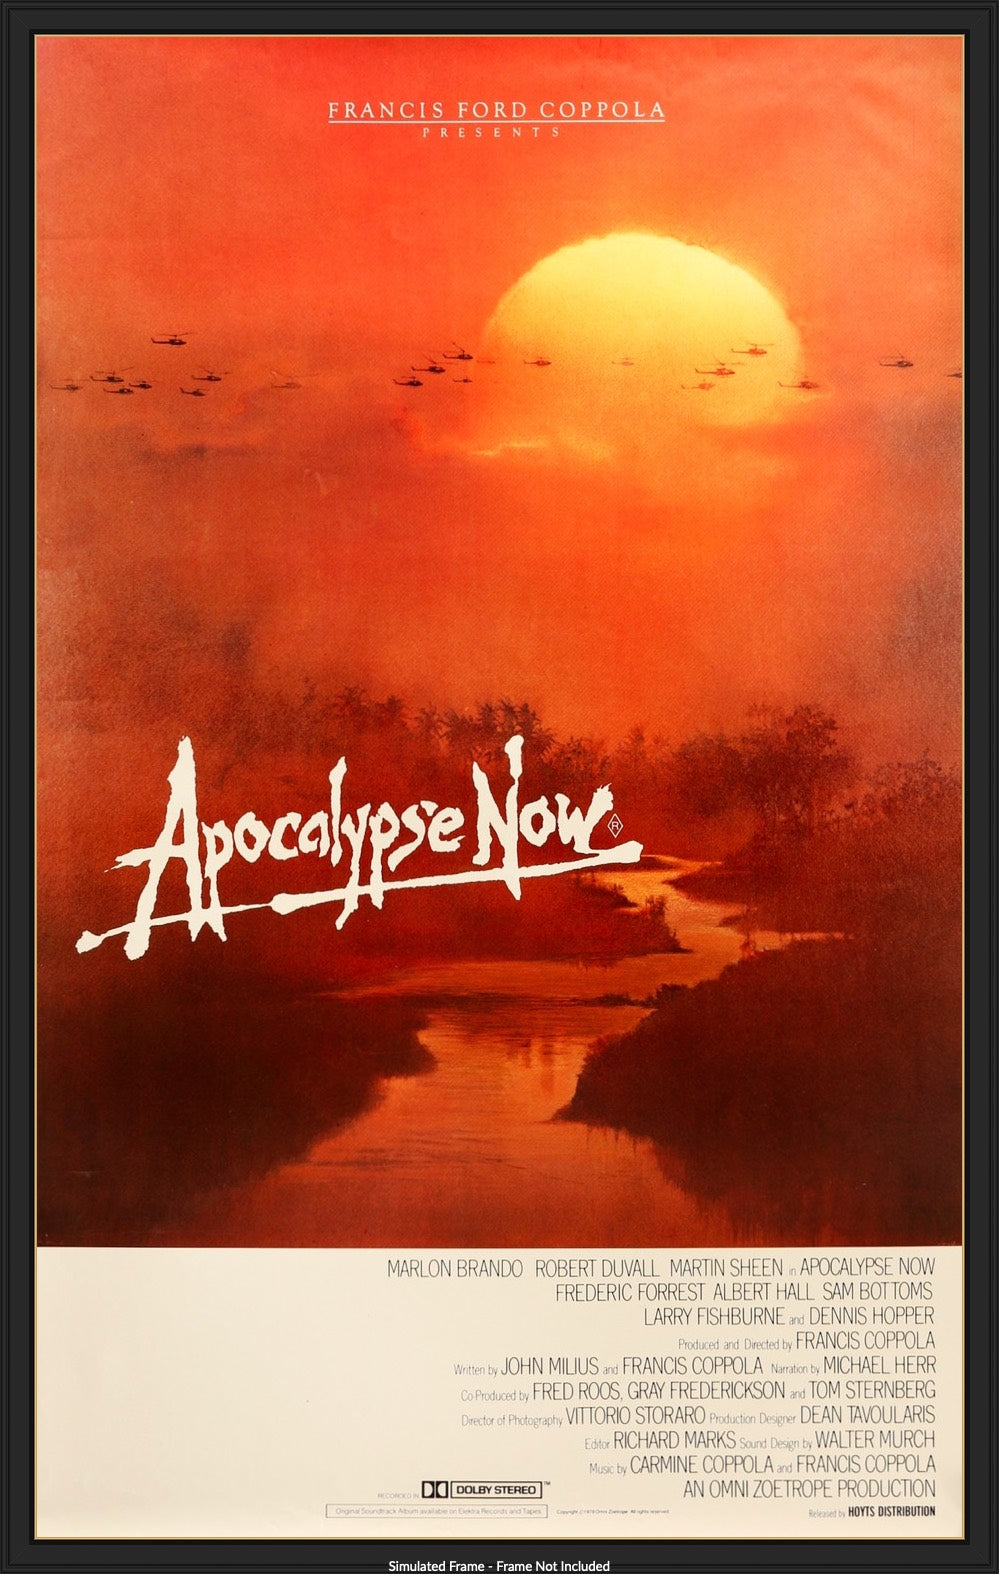 Apocalypse Now (1979) original movie poster for sale at Original Film Art